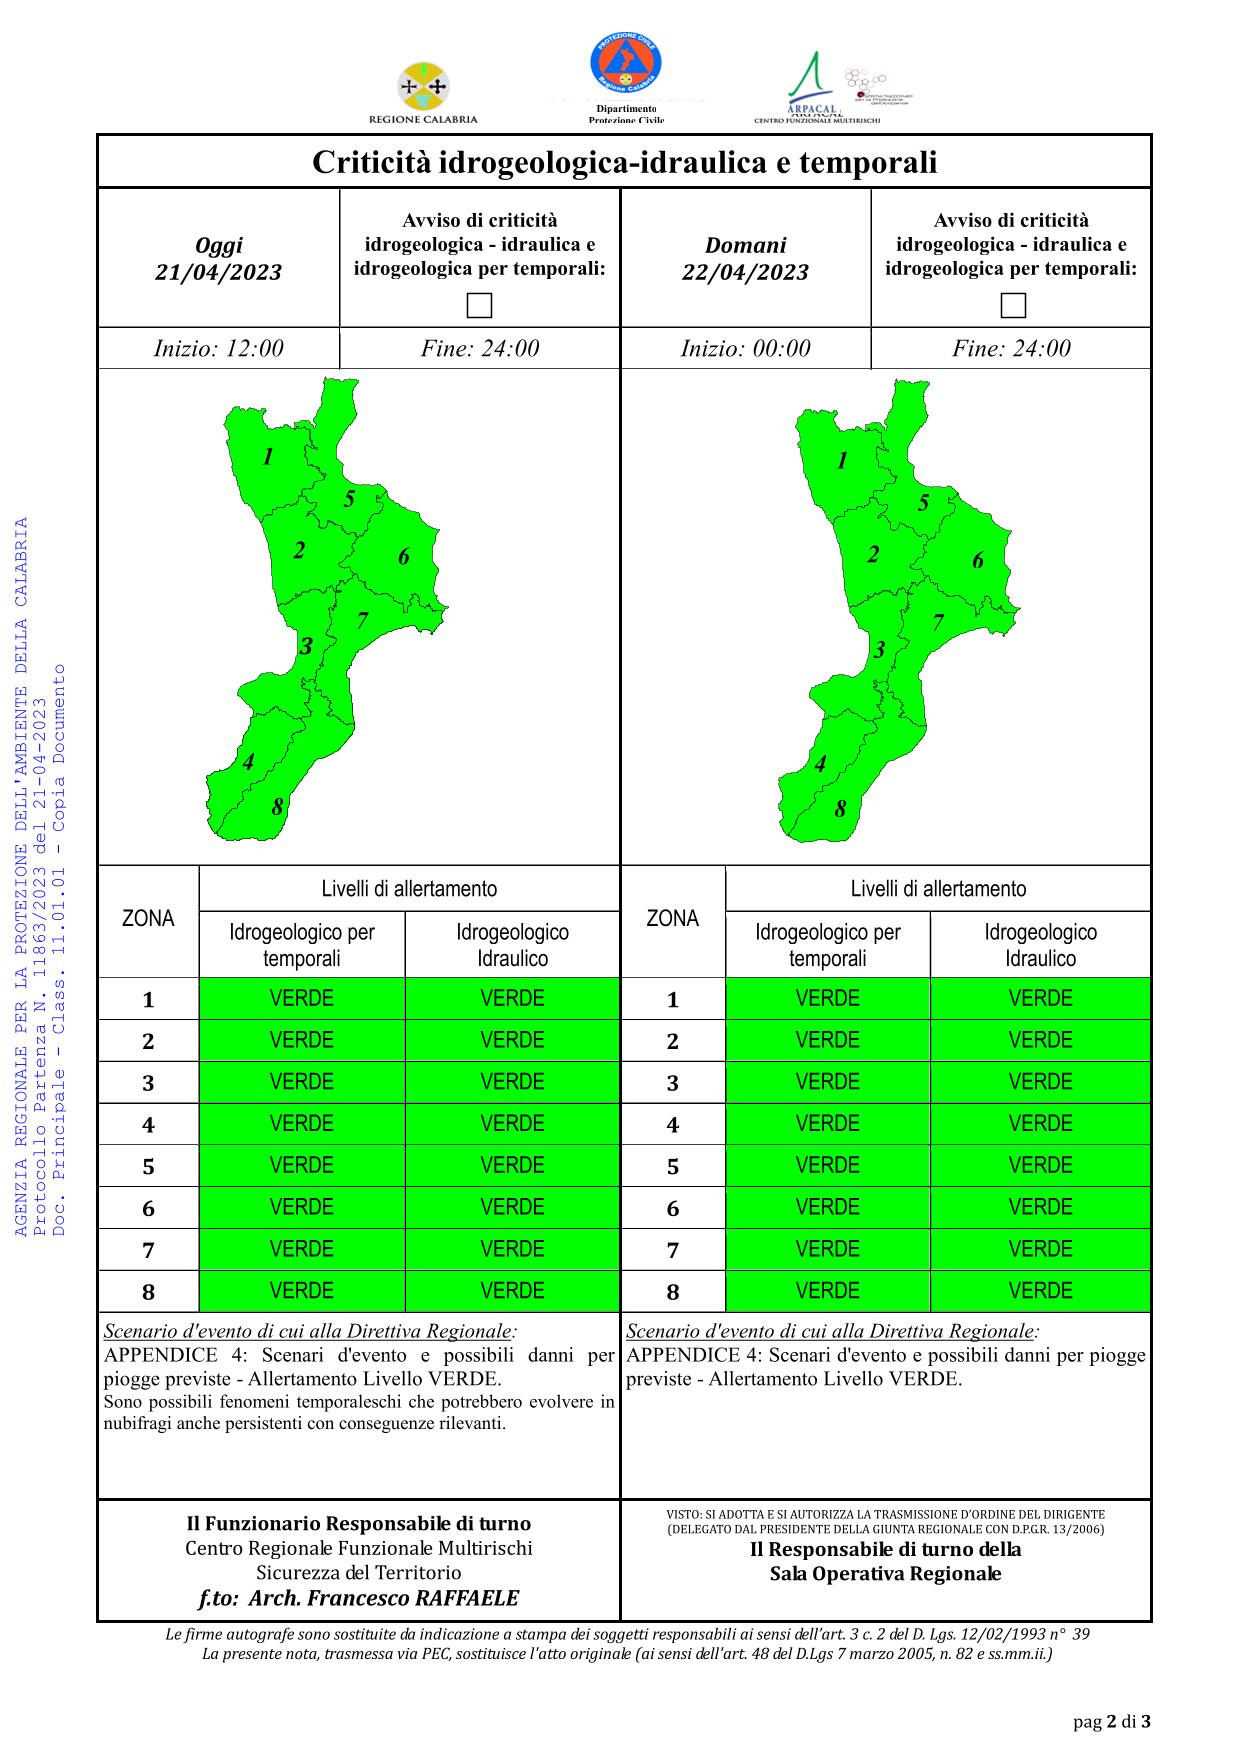 Criticità idrogeologica-idraulica e temporali in Calabria 21-04-2023